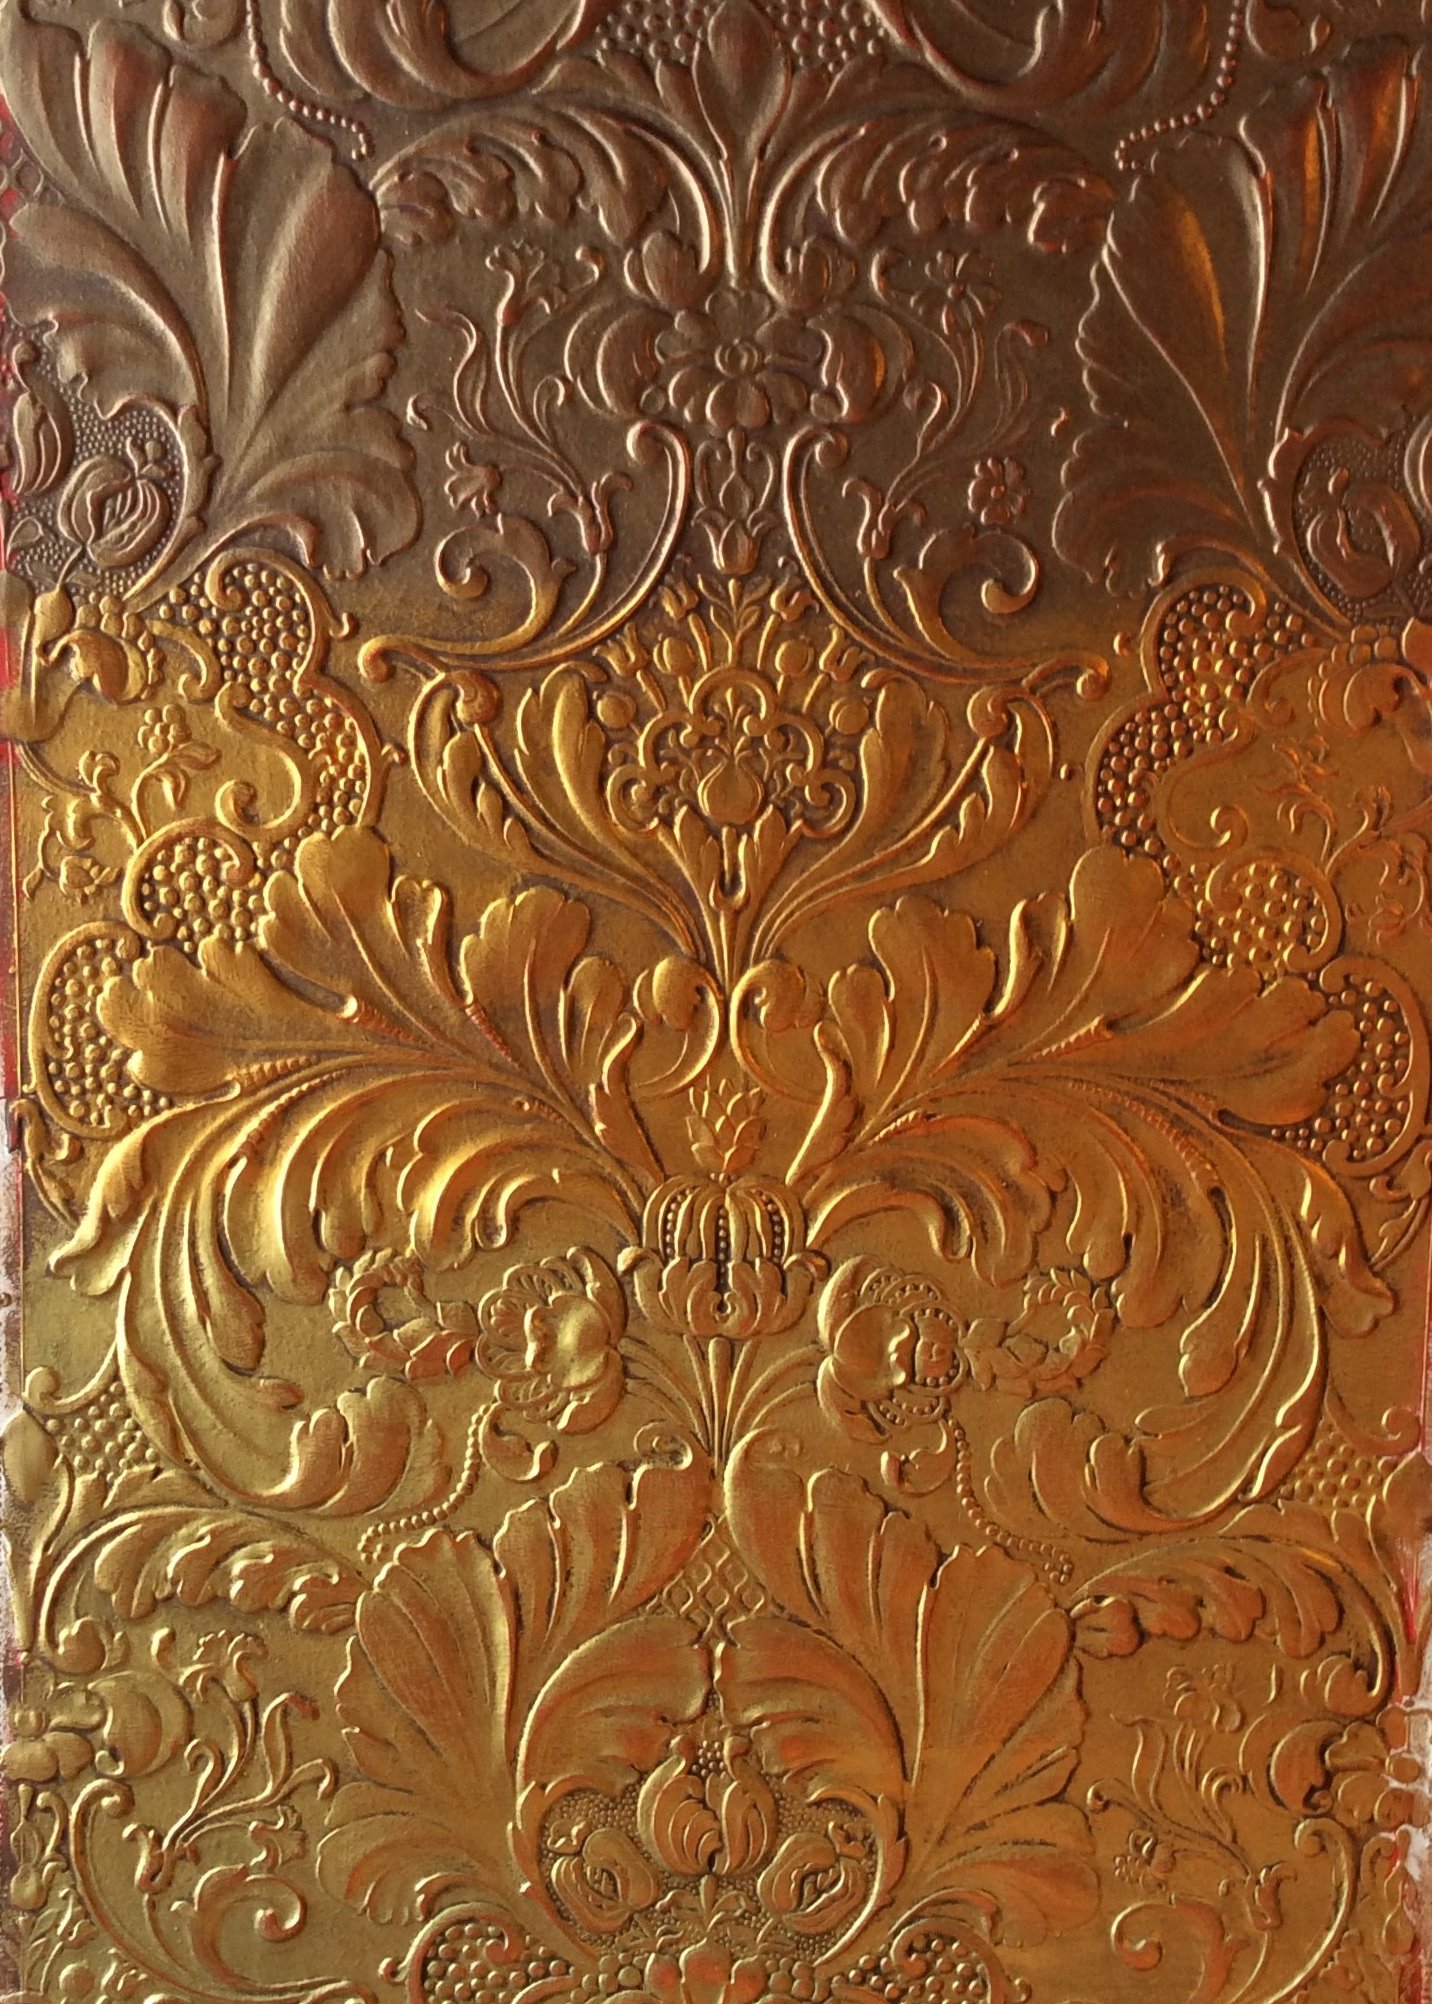 Gold metallic finish on Lincrusta